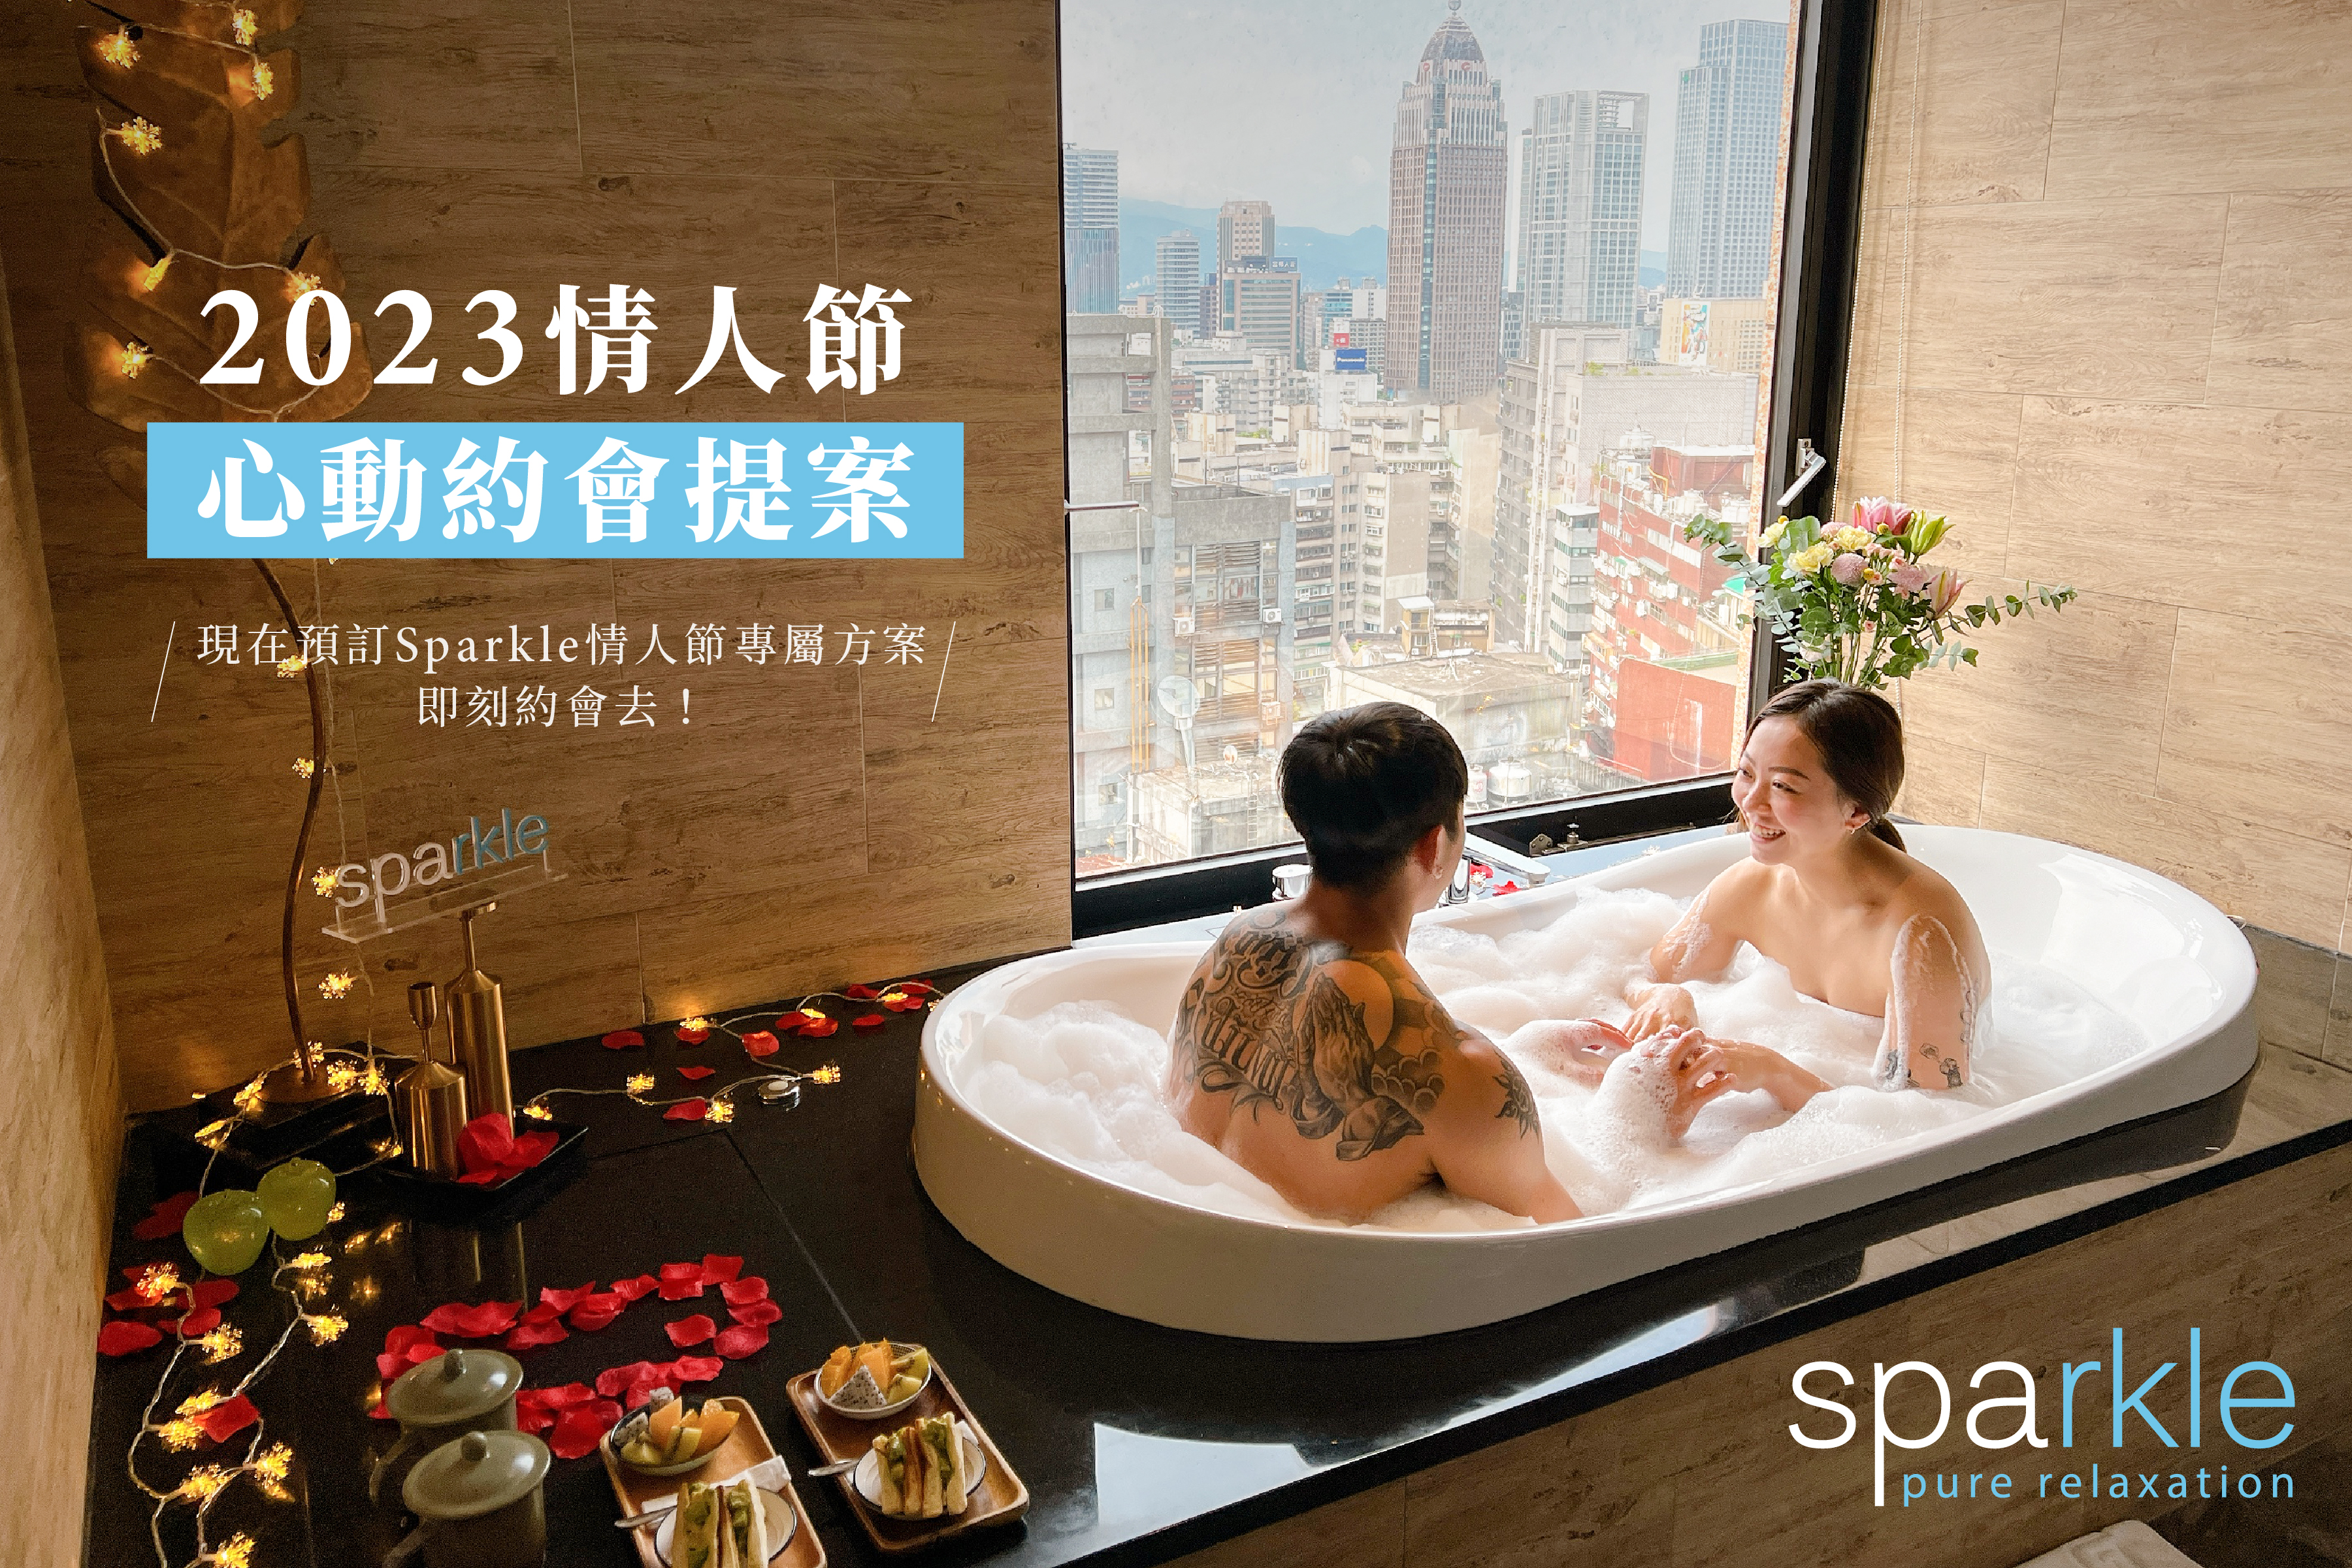 Sparkle spa【2023情人節方案】90分鐘雙人優惠